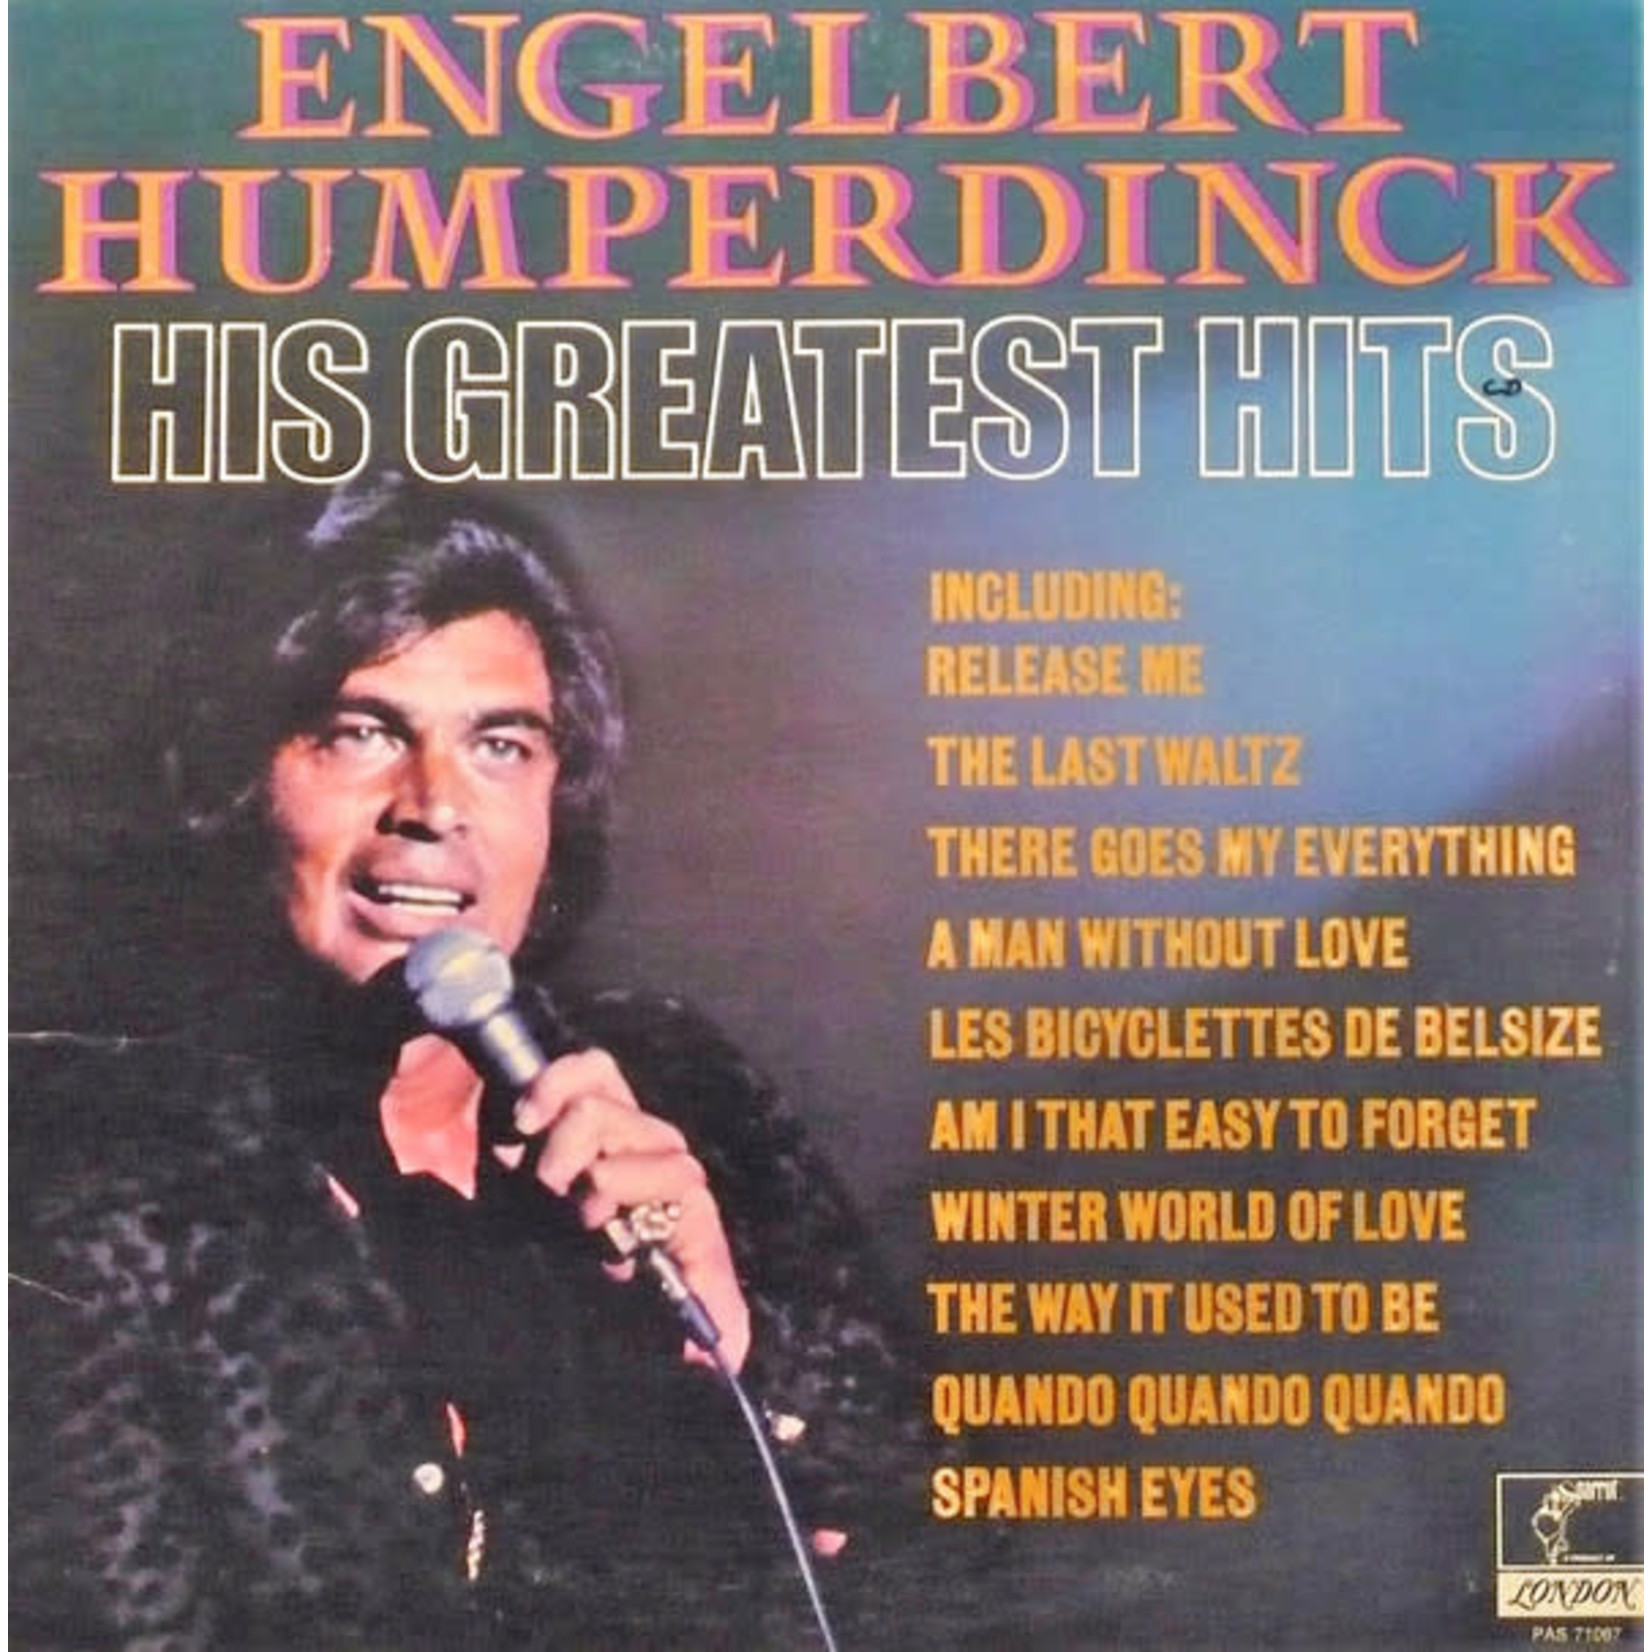 Engelbert Humperdinck Engelbert Humperdinck – His Greatest Hits (VG, 1974, LP, Parrot – PAS 71067, Canada)